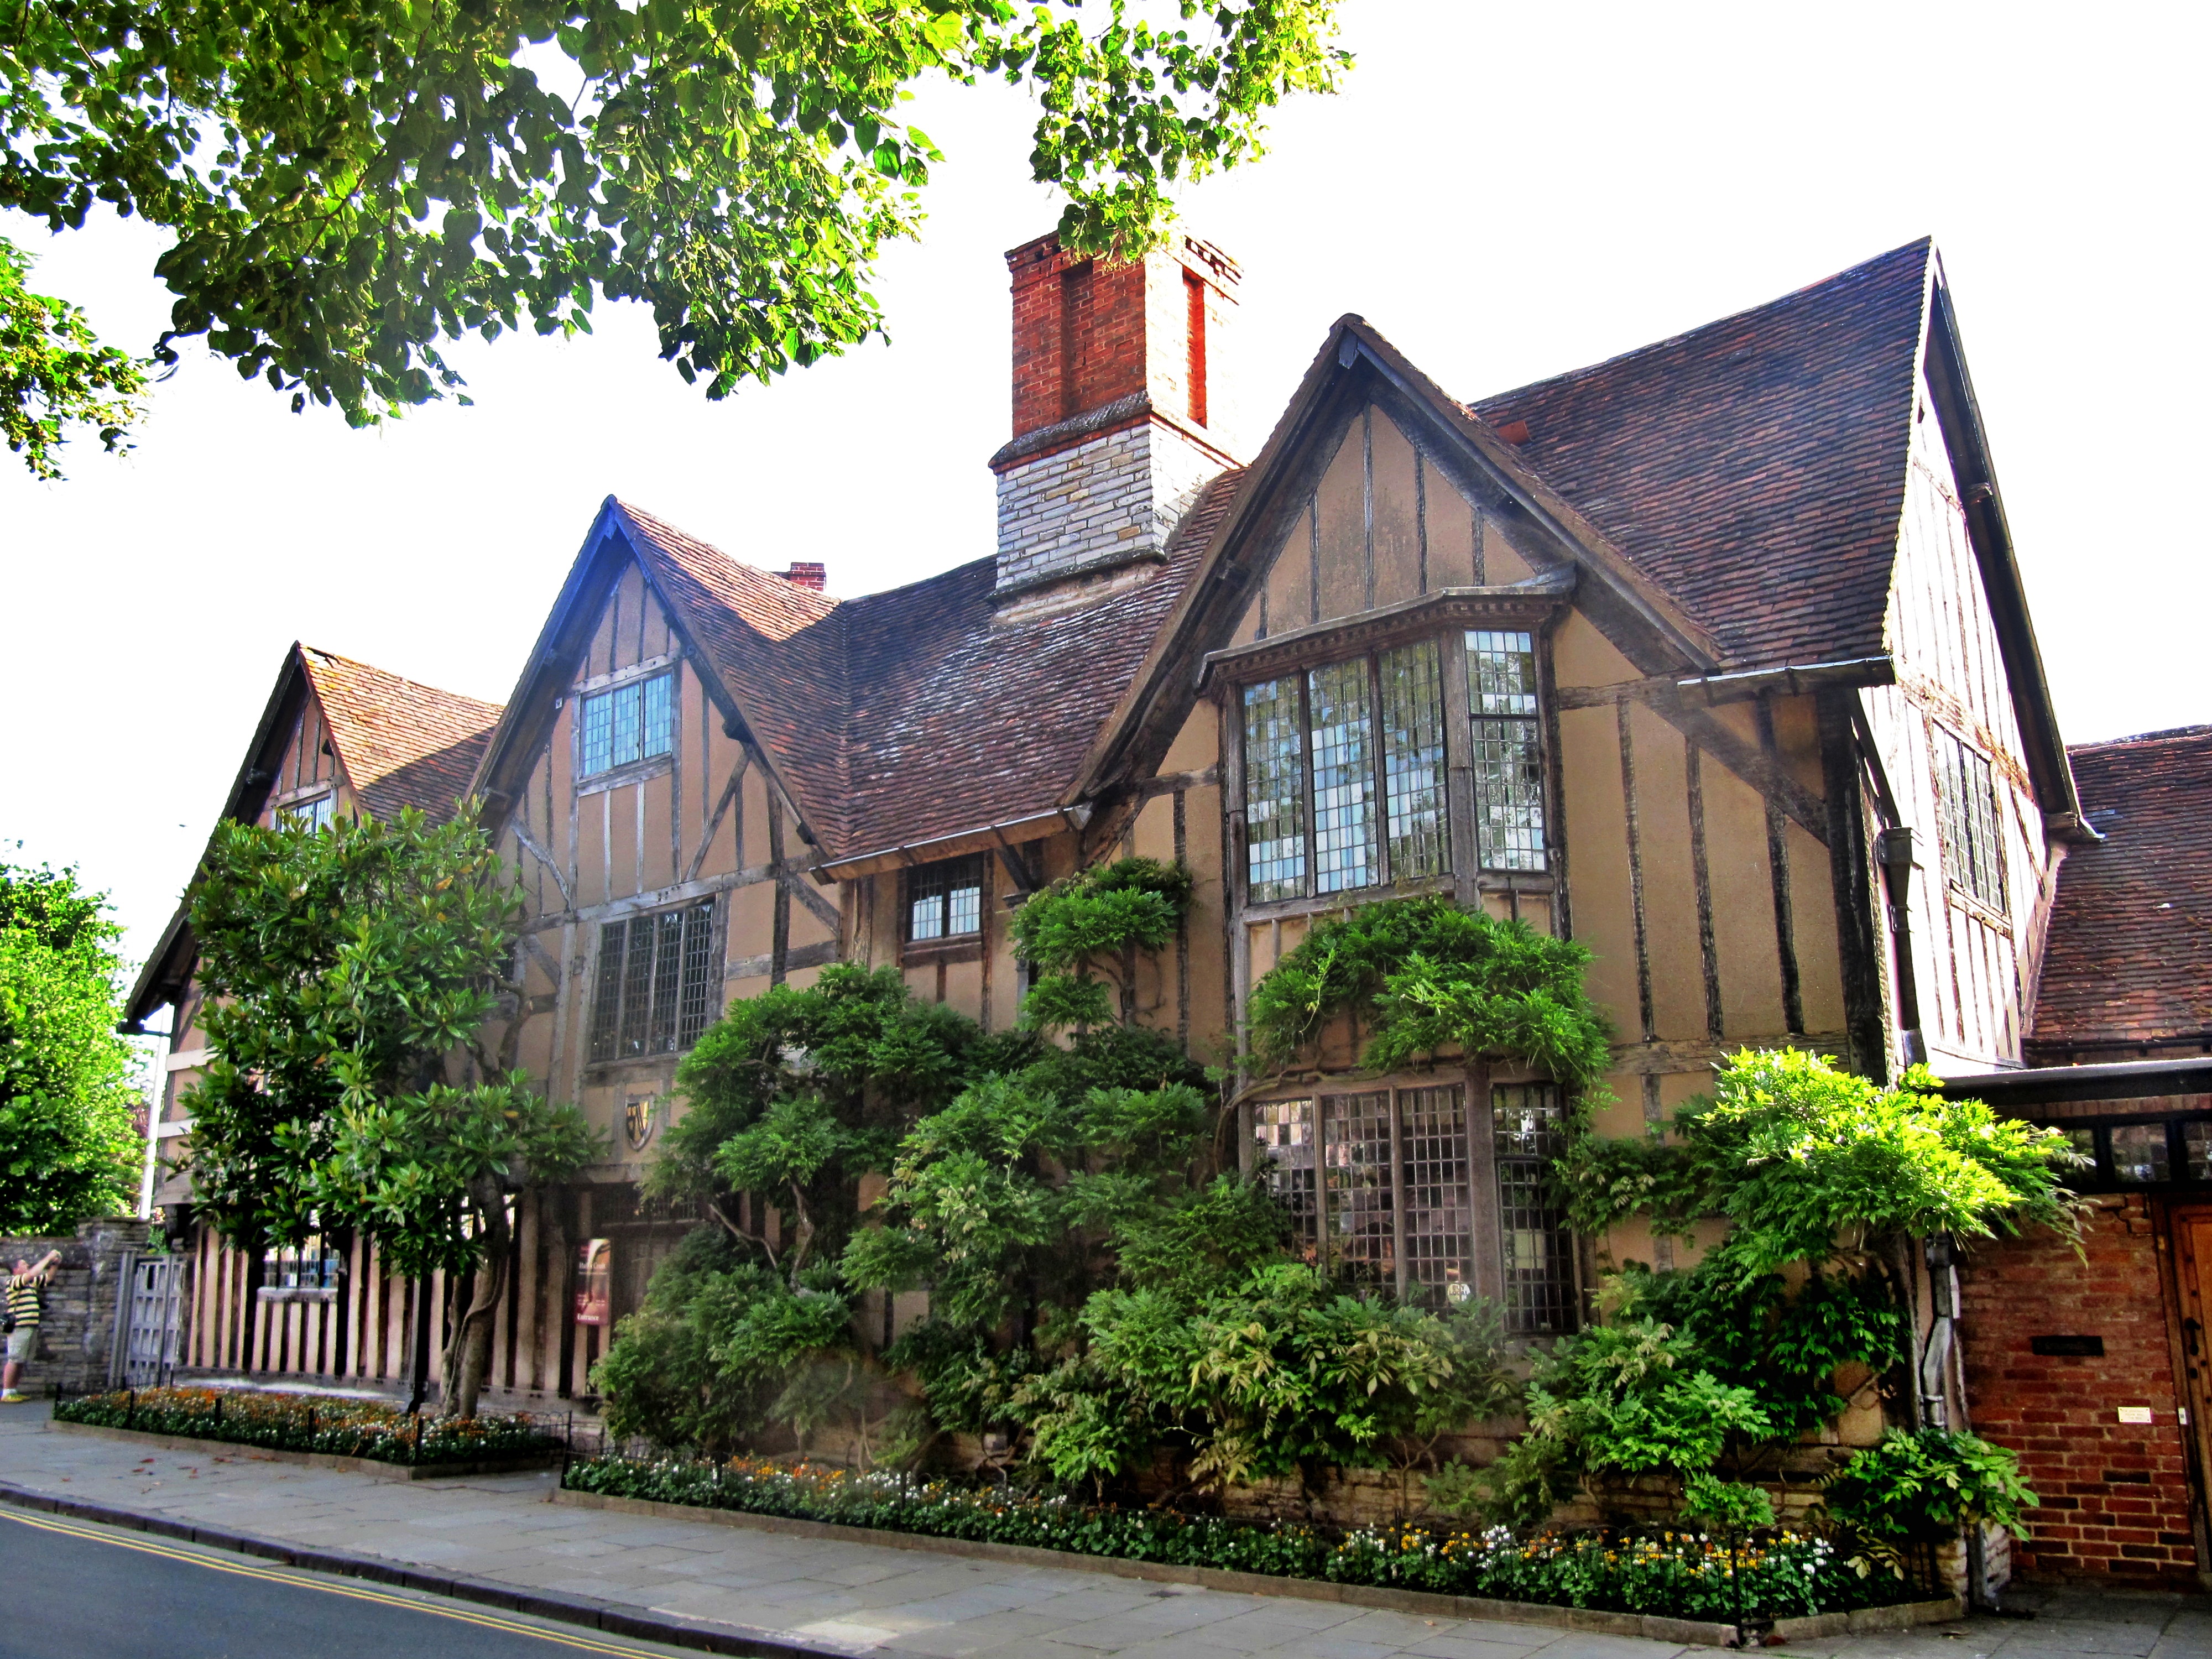 File:Stratford-upon-Avon, Hall's Croft.jpg - Wikimedia Commons